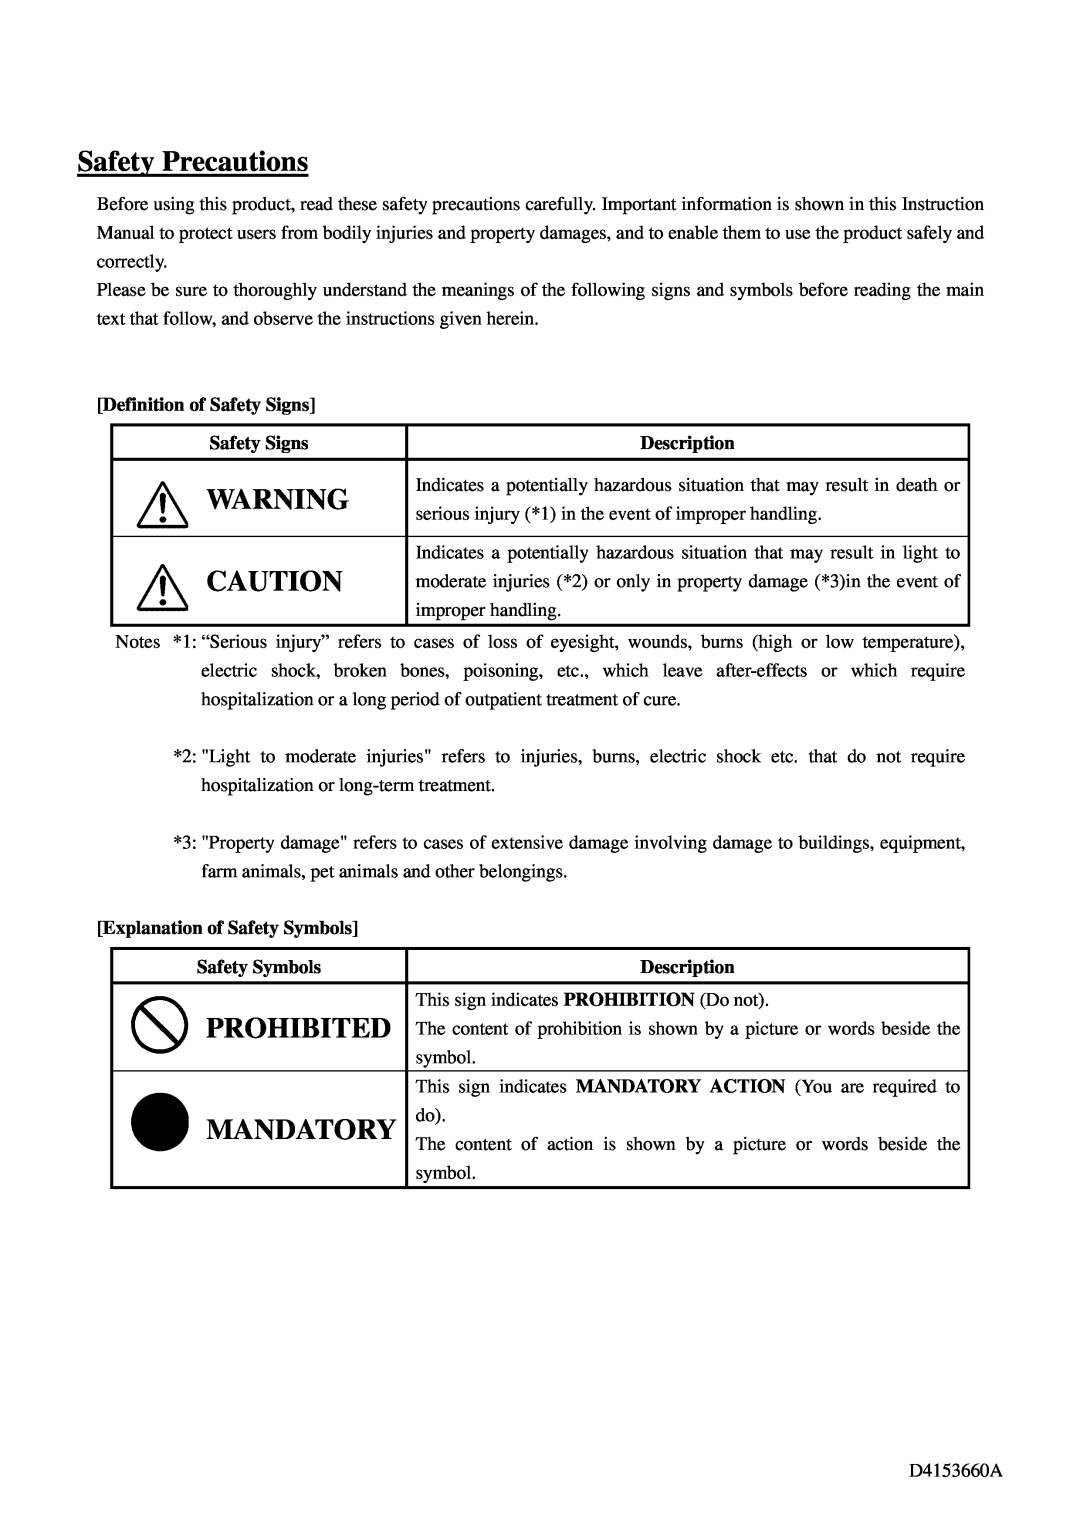 Toshiba CSGU15CC18 Safety Precautions, Prohibited, Mandatory, Definition of Safety Signs, Description, Safety Symbols 